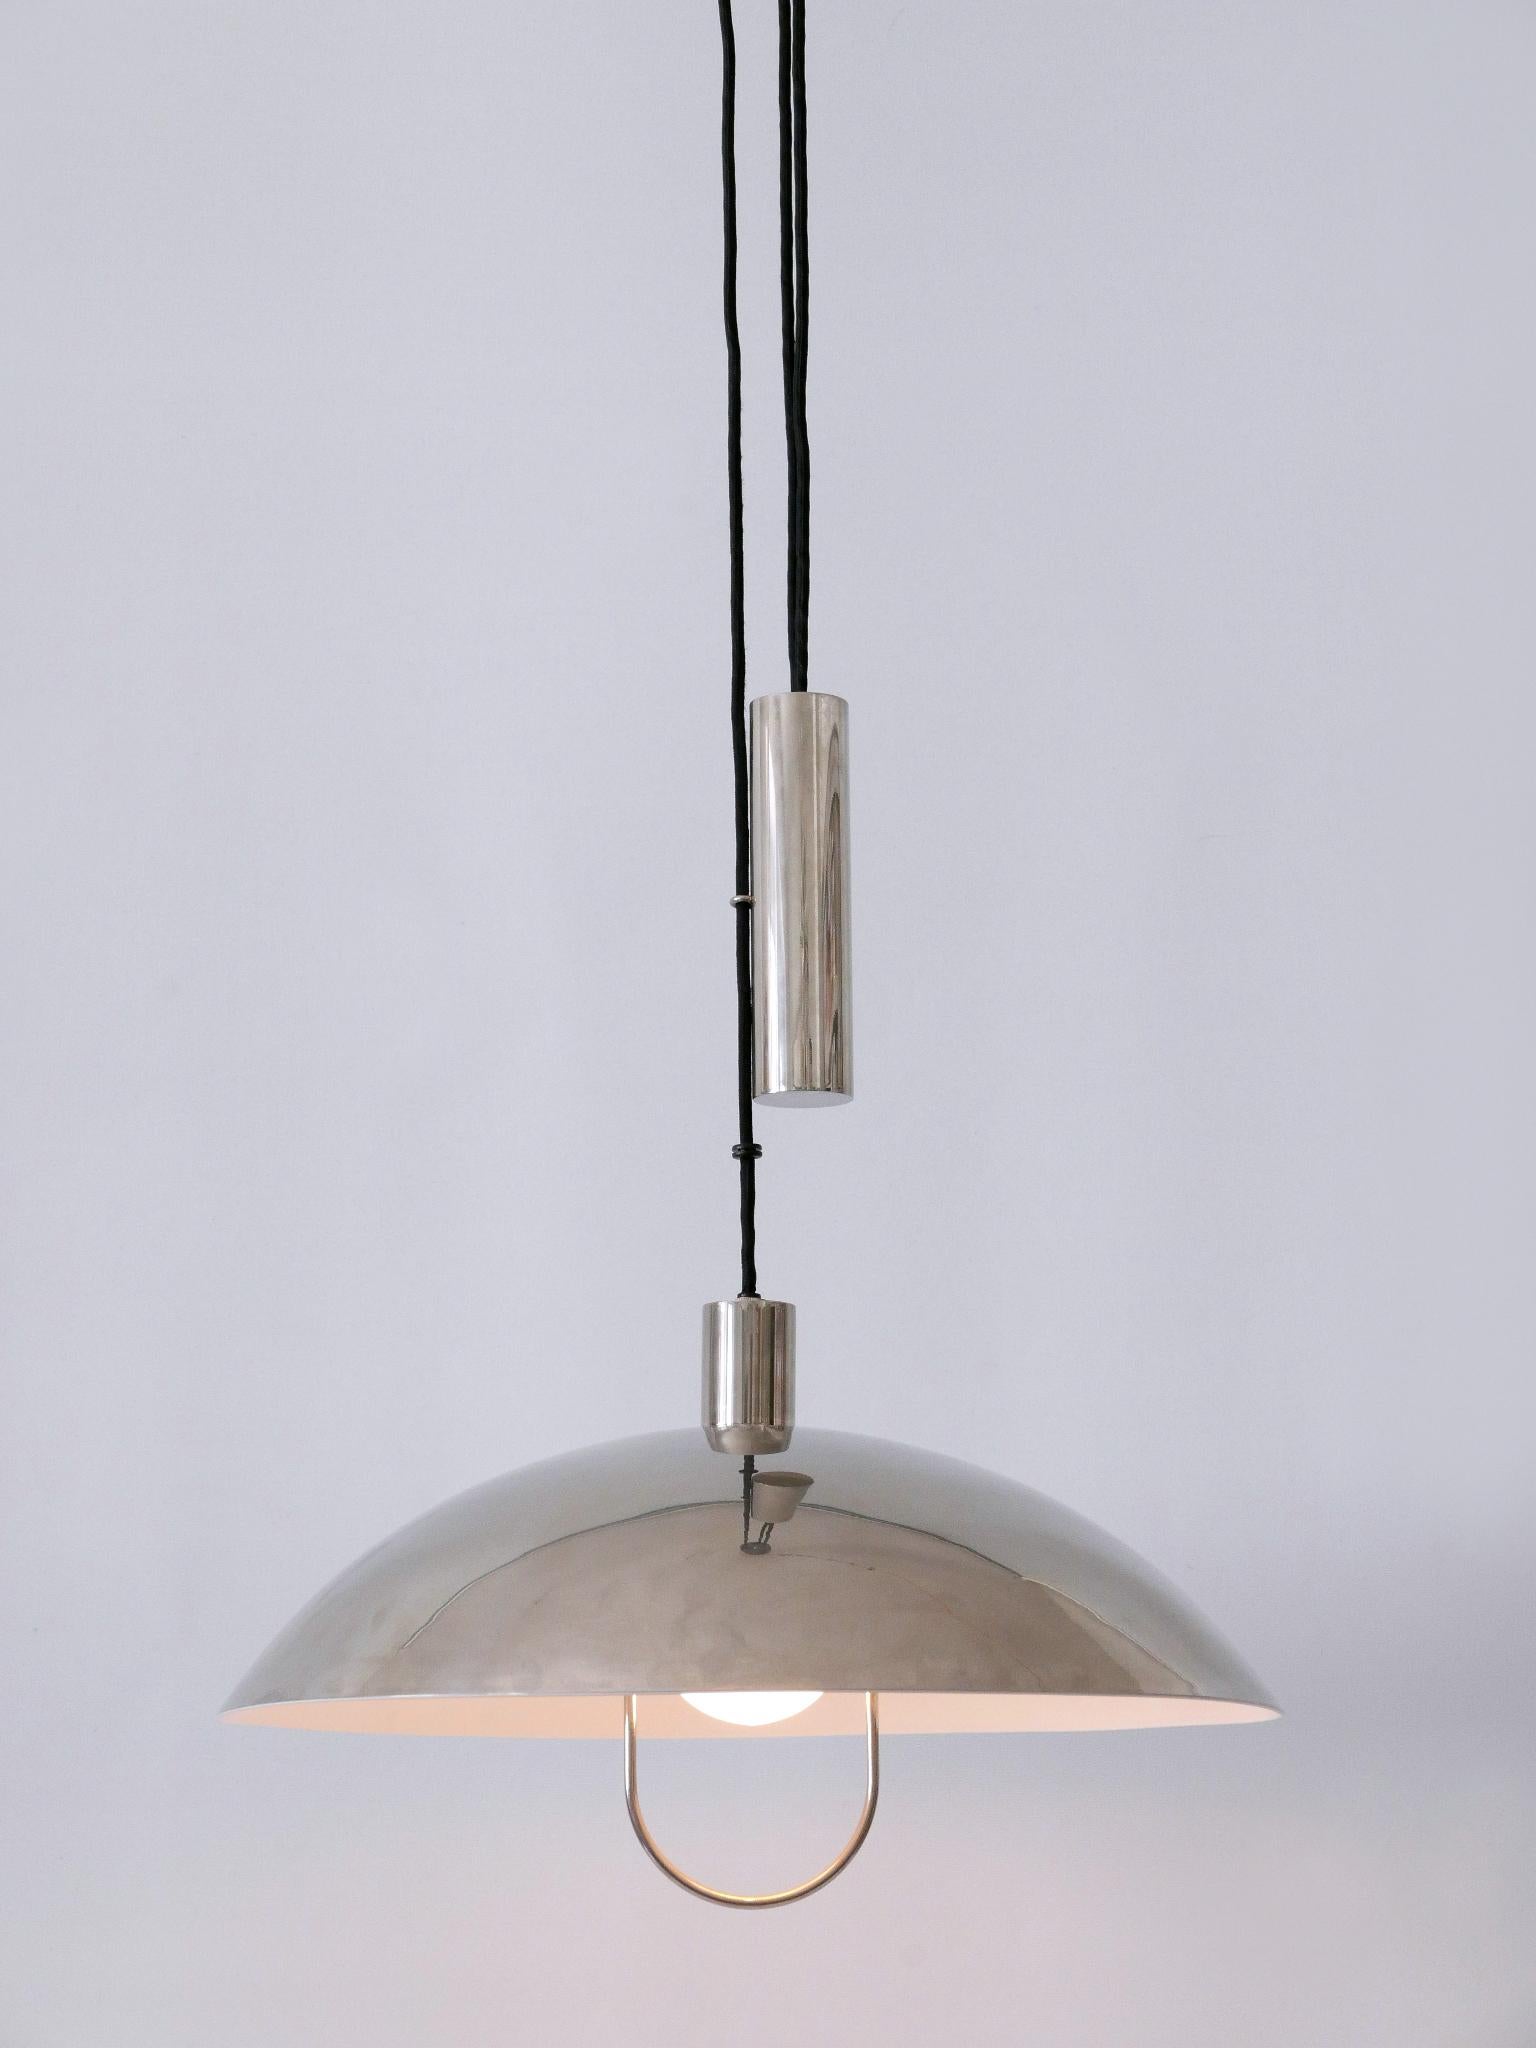 Early Tecnolumen Pendant Lamp 'Bauhaus HMB 25/500' by Marianne Brandt 1980s For Sale 5